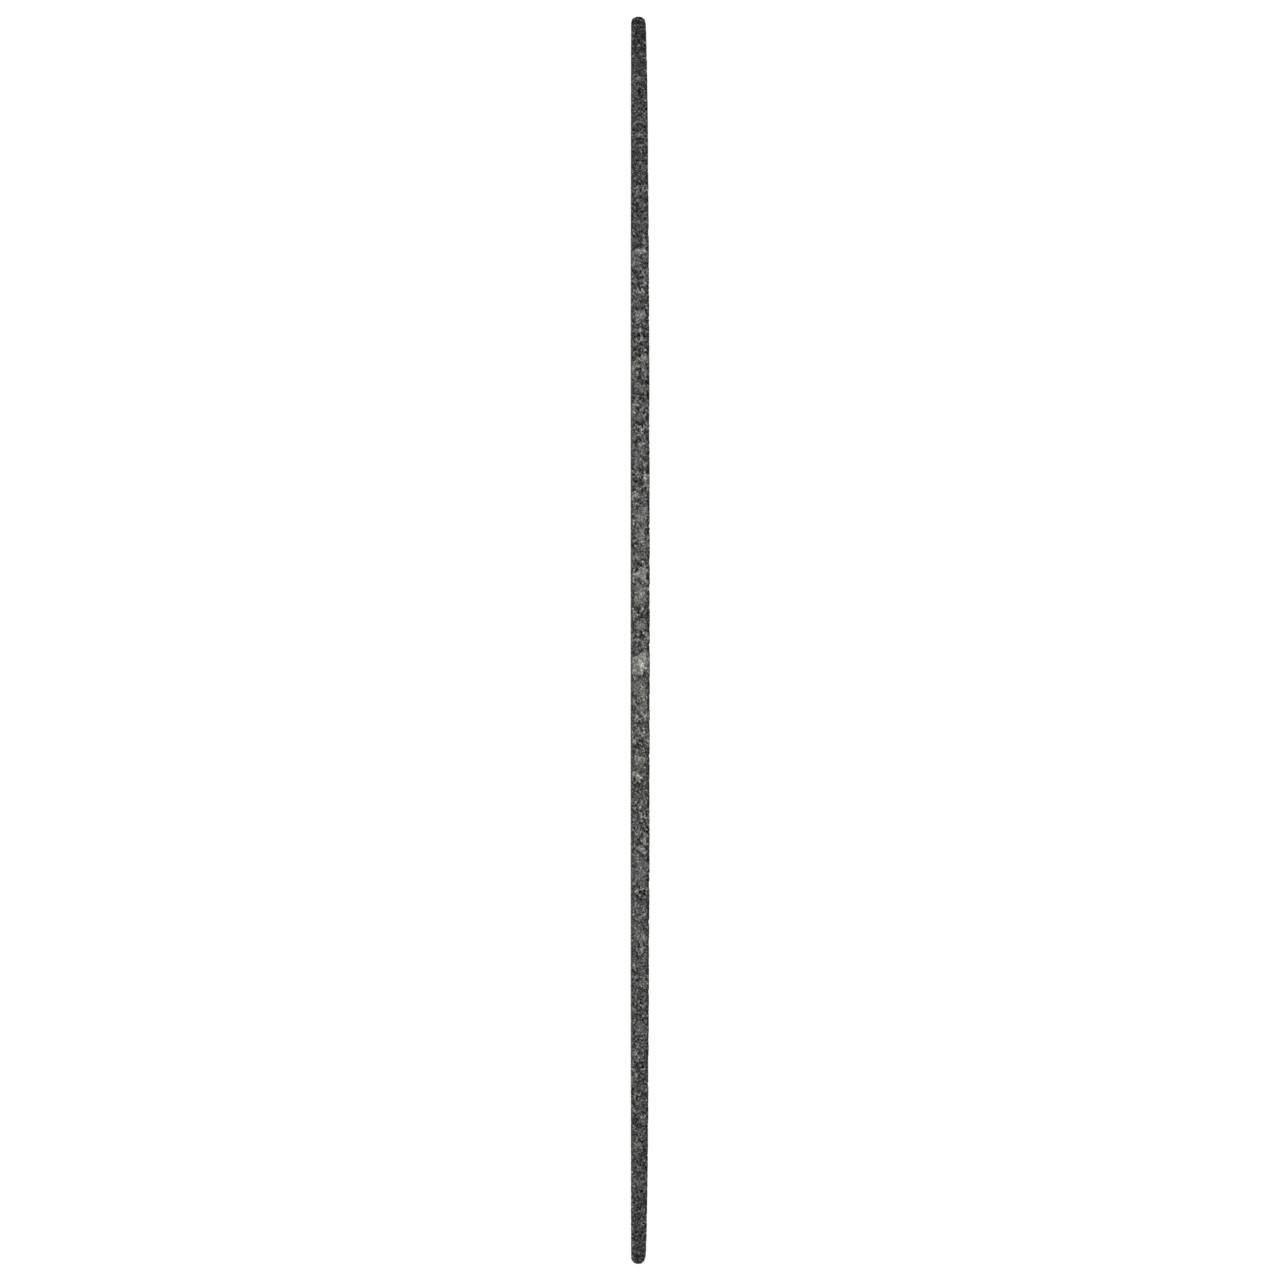 Dischi da taglio Tyrolit DxDxH 63x2x6 Per acciaio inox, forma: 41 - versione diritta, Art. 324402